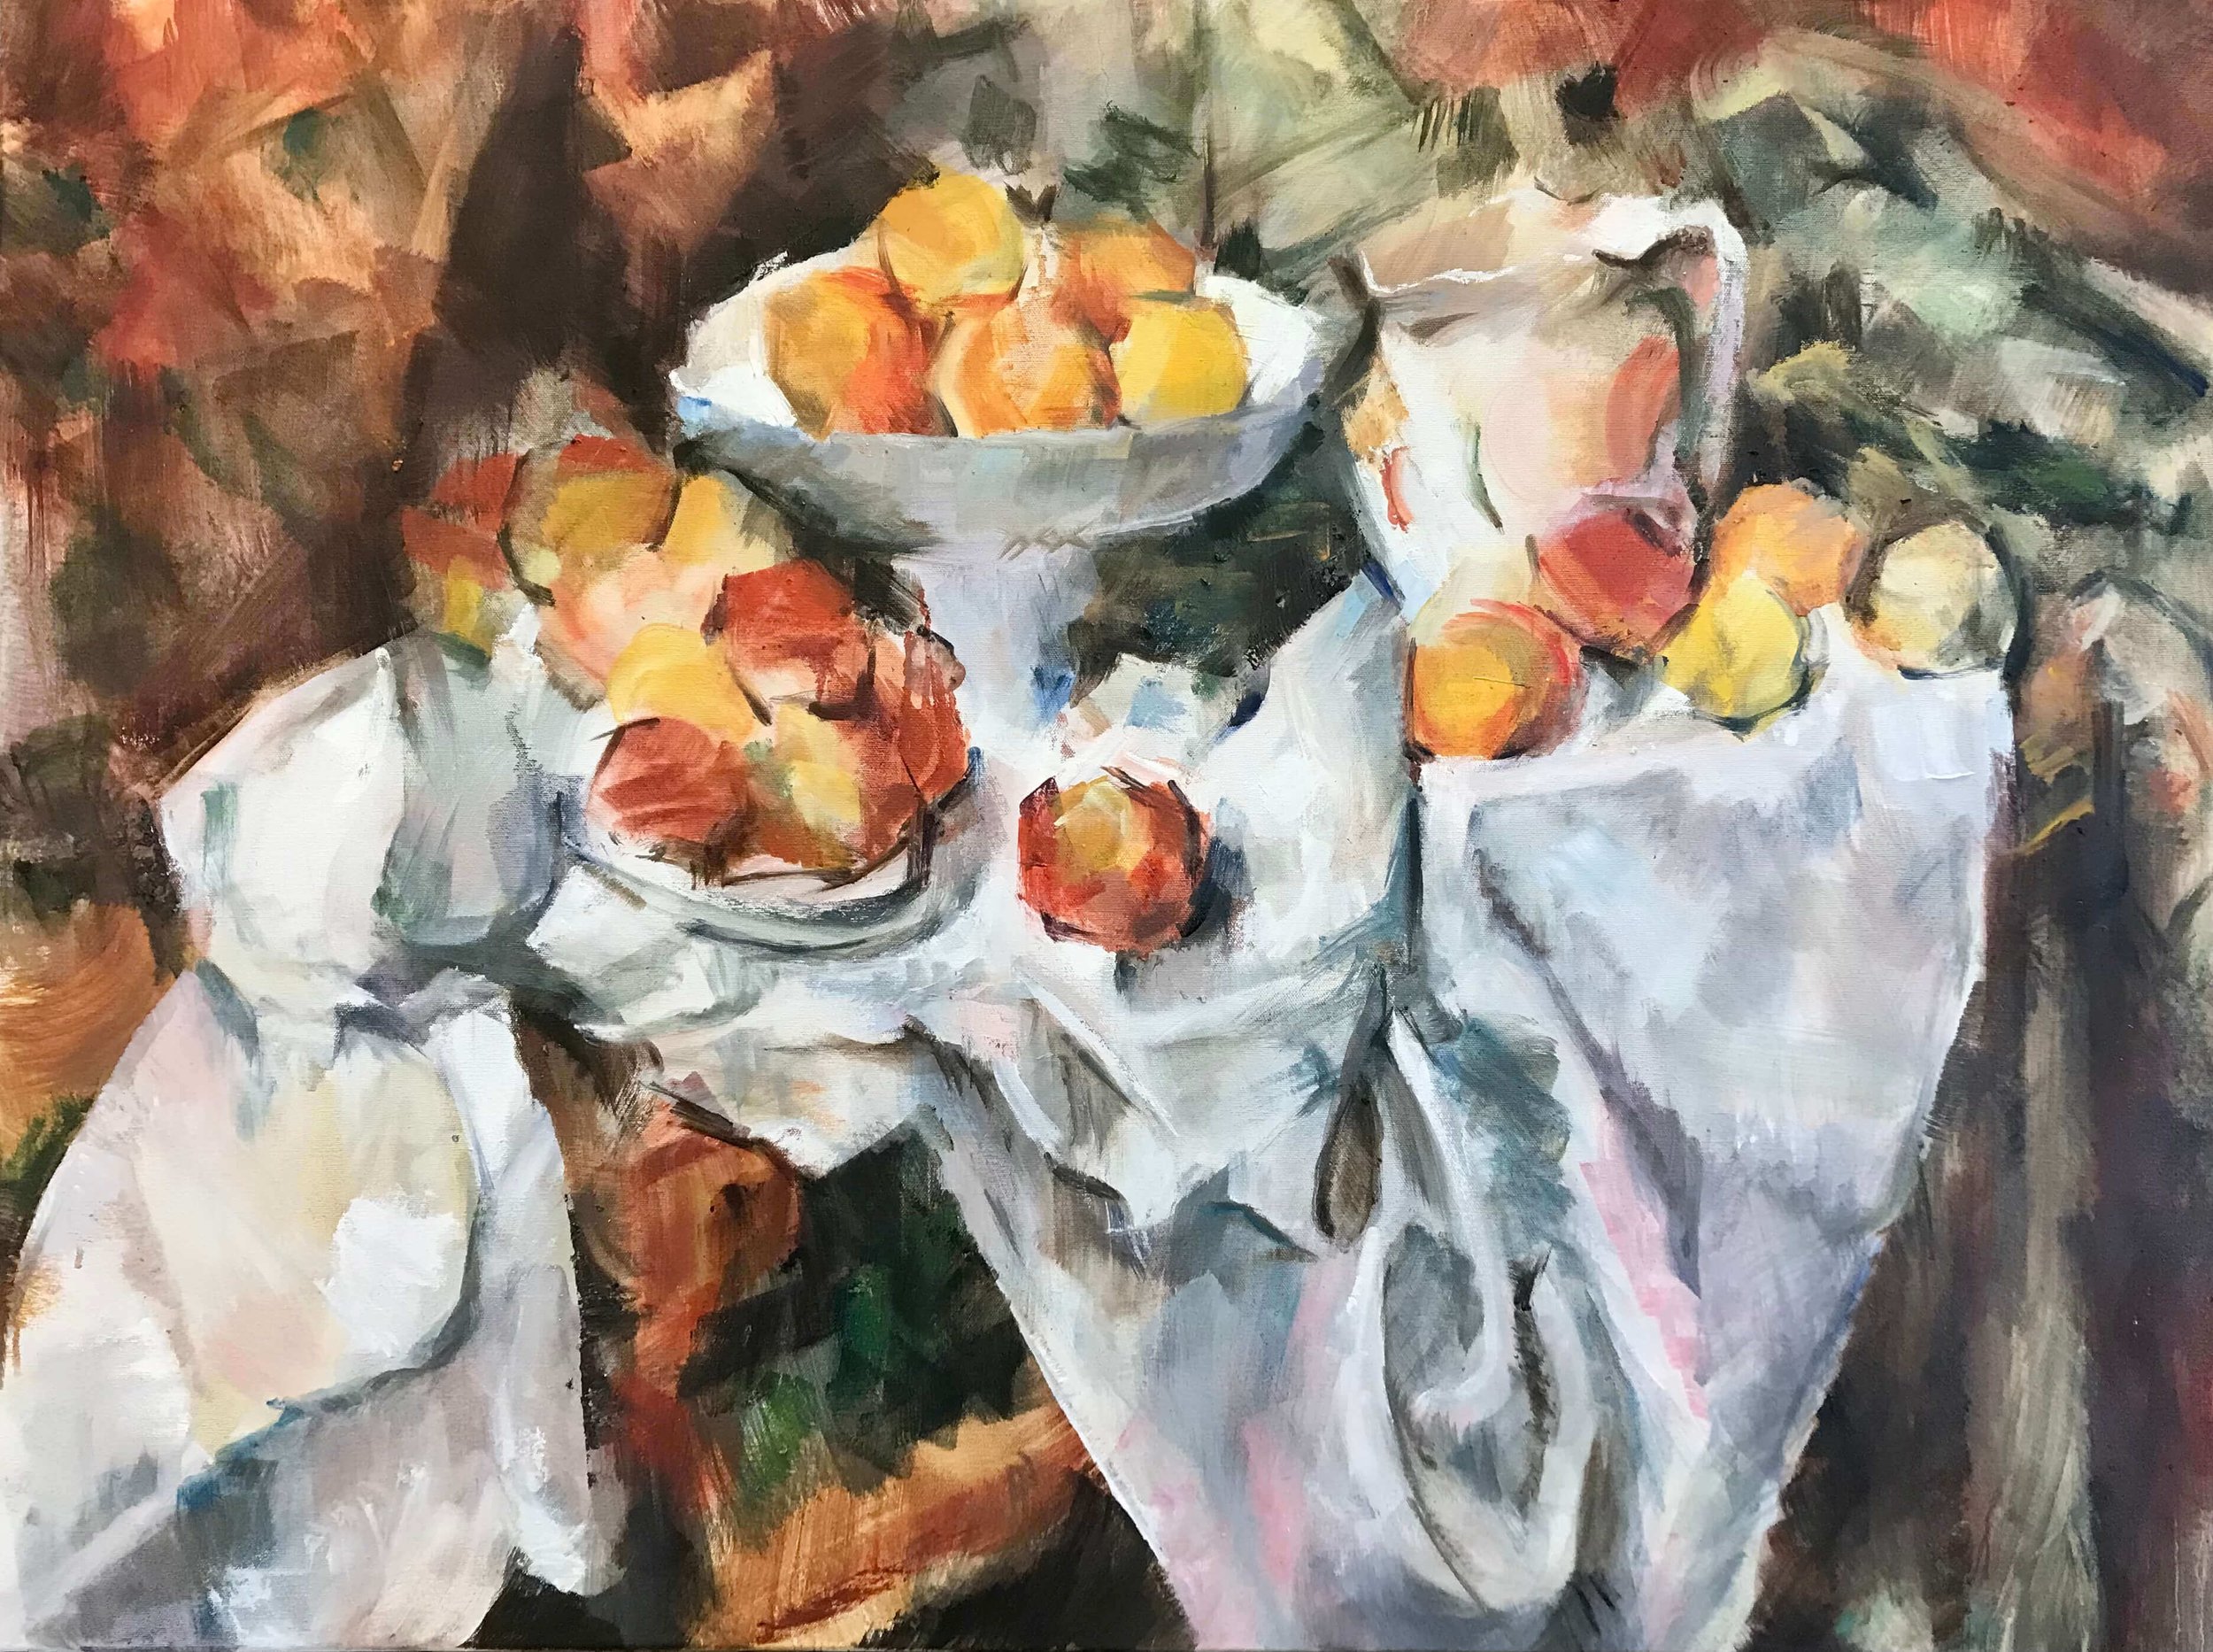 apples and oranges (after Cézanne) (Copy)